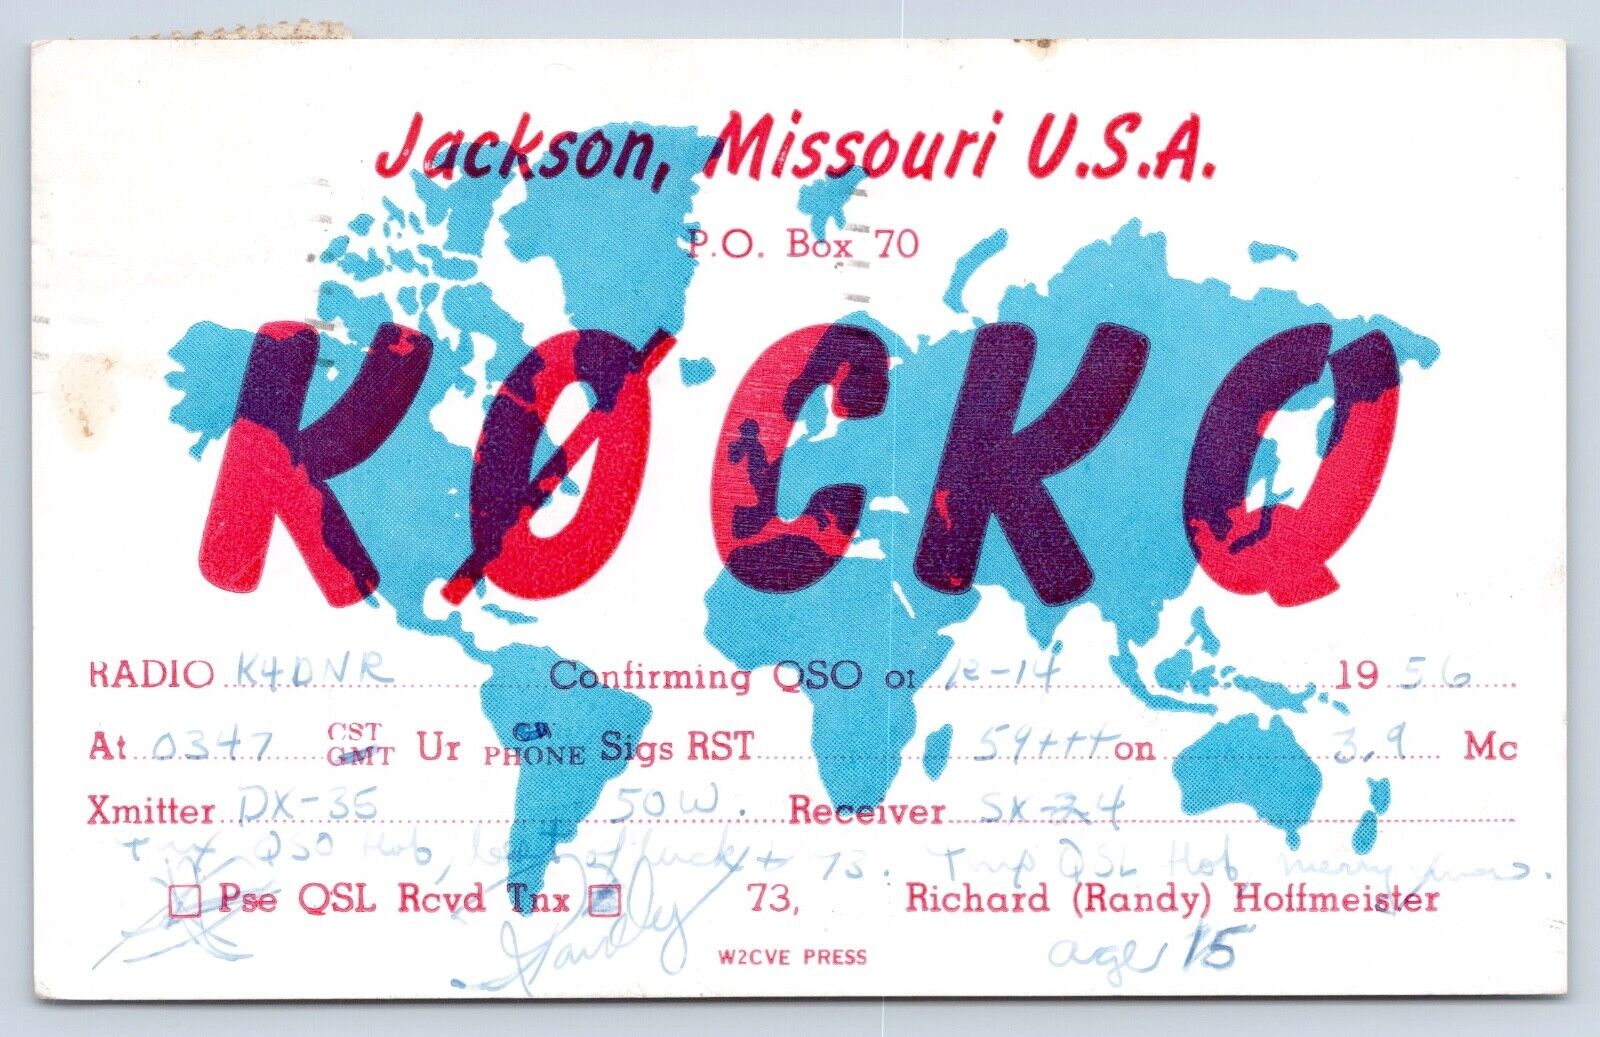 QSL CB Ham Radio KØCKQ Jackson Missouri Vtg Cape Girardeau County MO 1956 Card